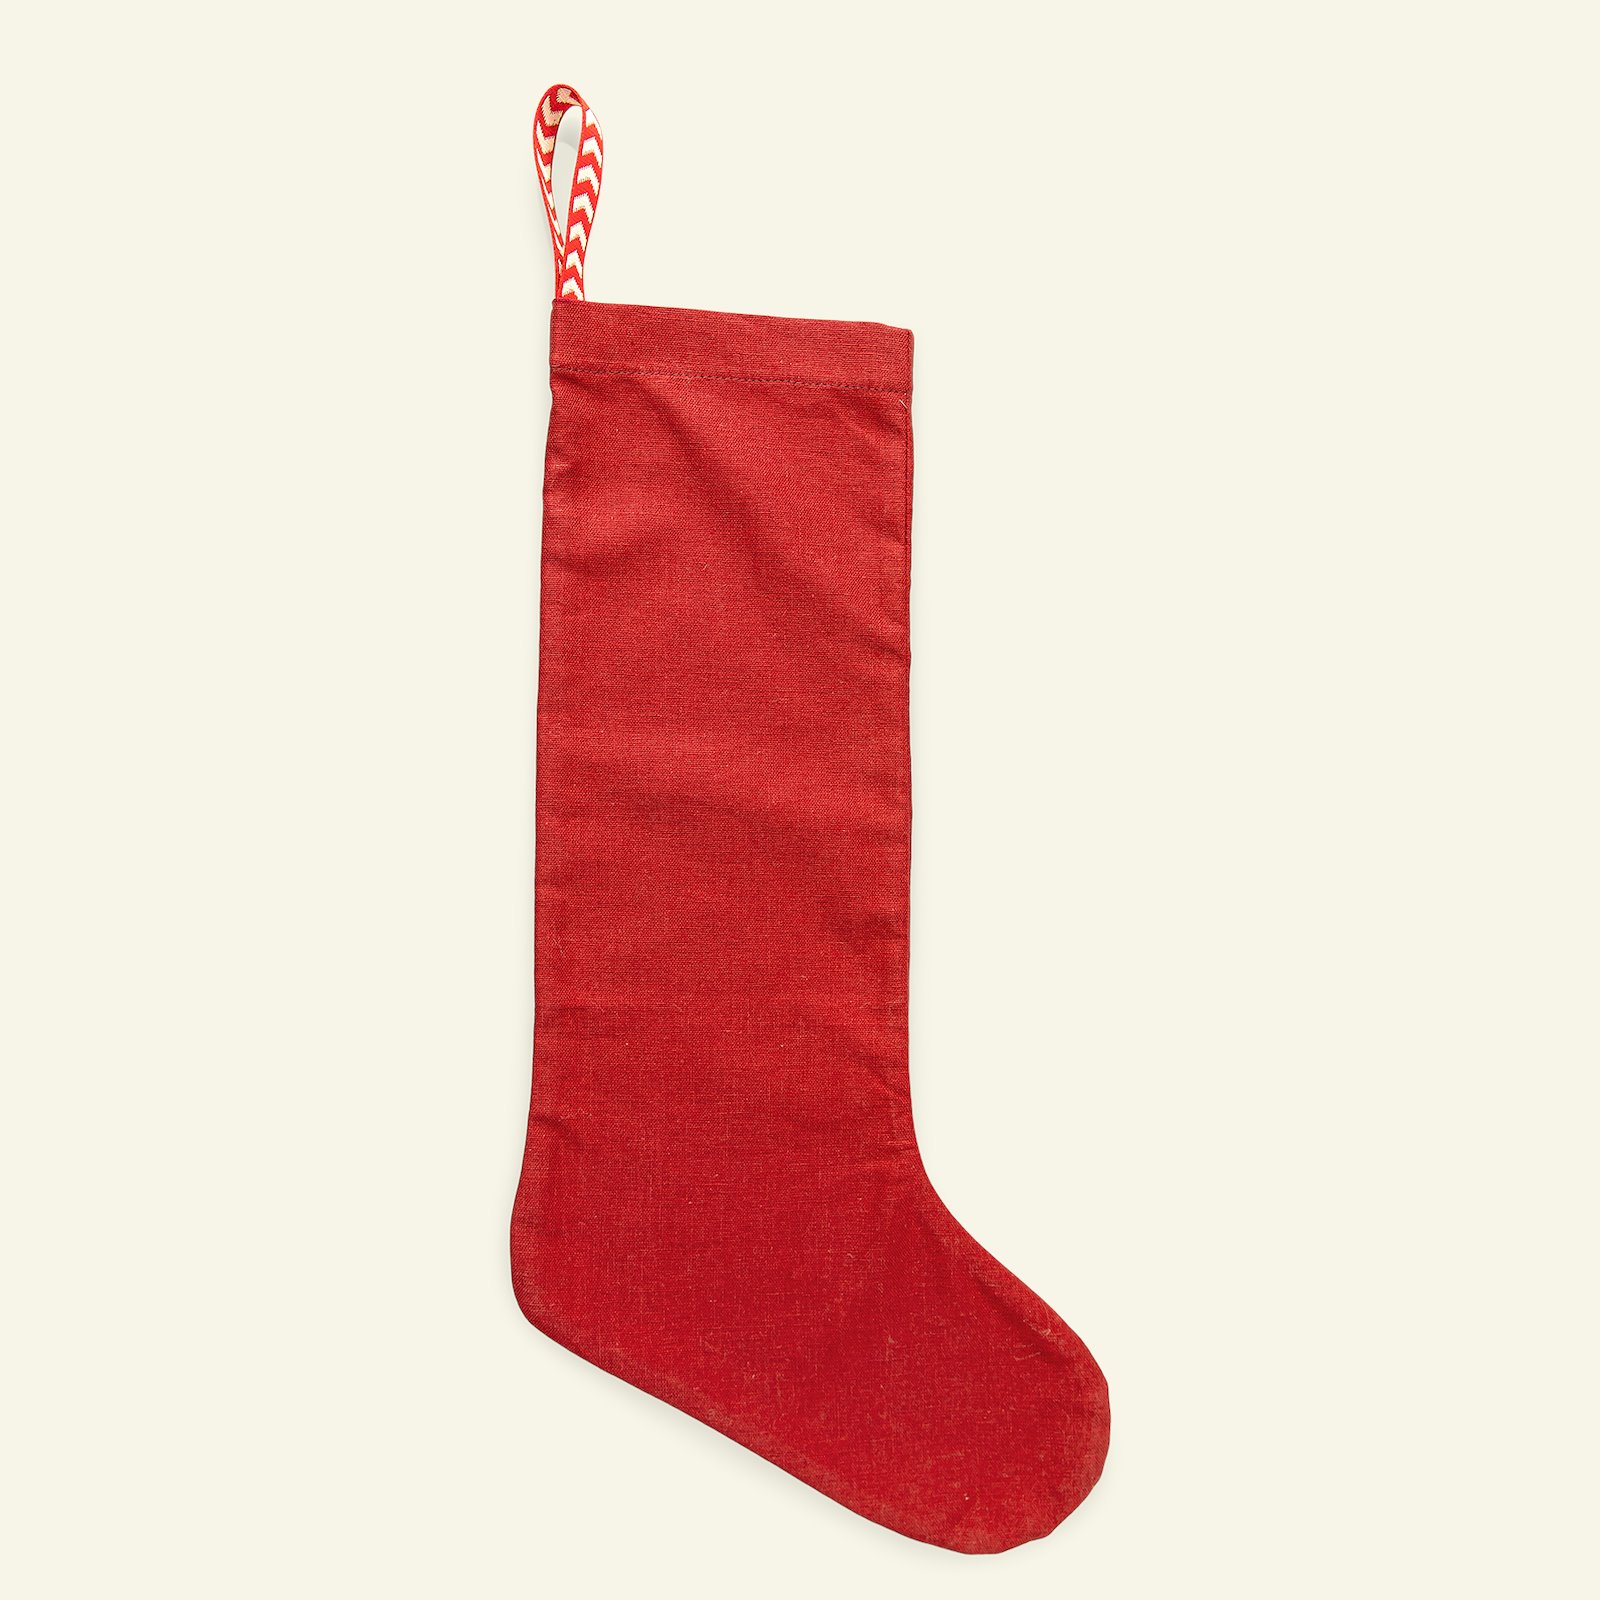 Christmas sock in 6 sizes p90360_410152_22443_sskit